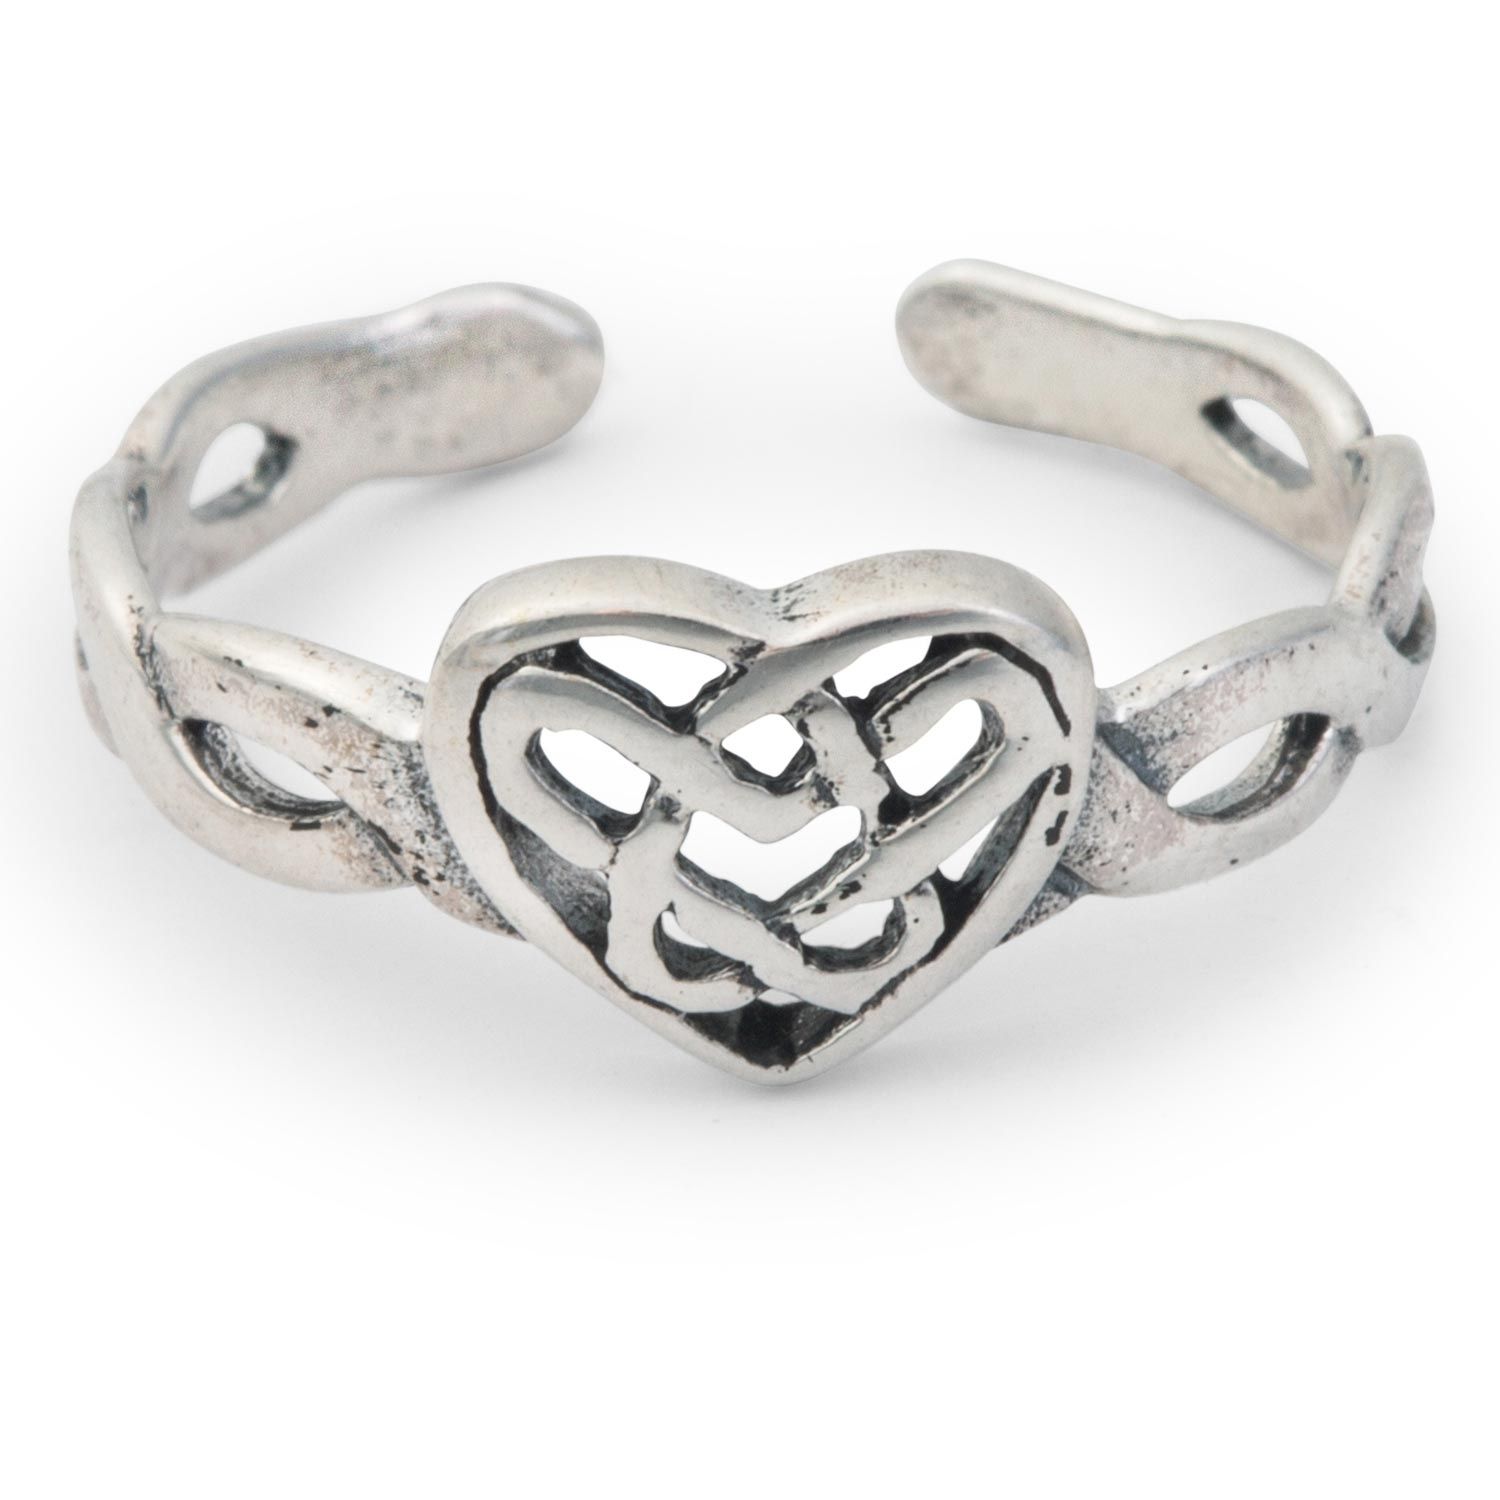 Irish, Celtic, & Claddagh Rings | Jewelry | Creative Irish Gifts Inside Latest Claddagh Toe Rings (View 6 of 15)